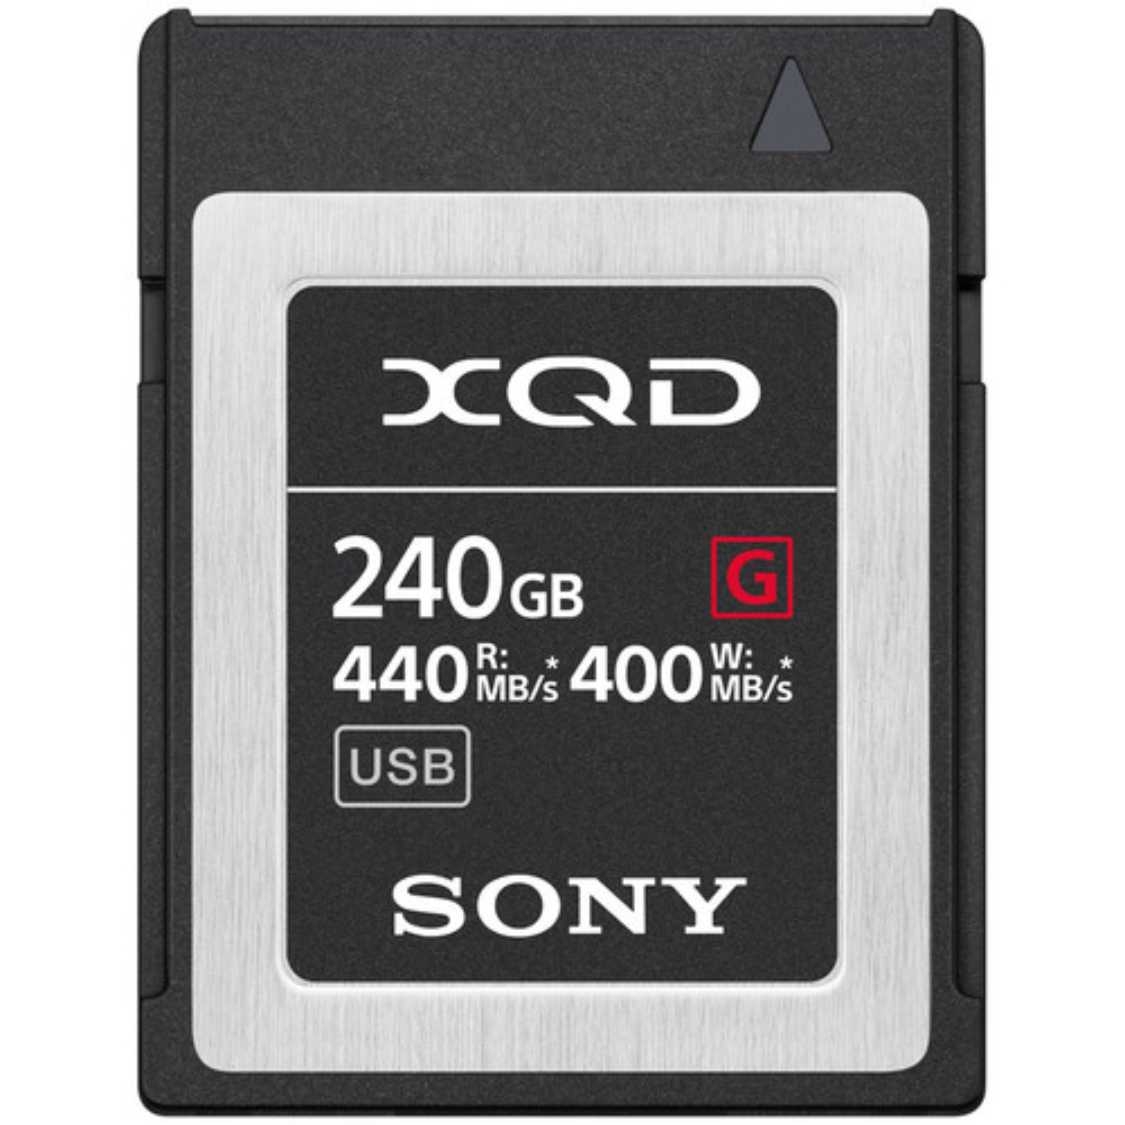 Sony 240GB XQD G Series Memory Card (440/400MBS)